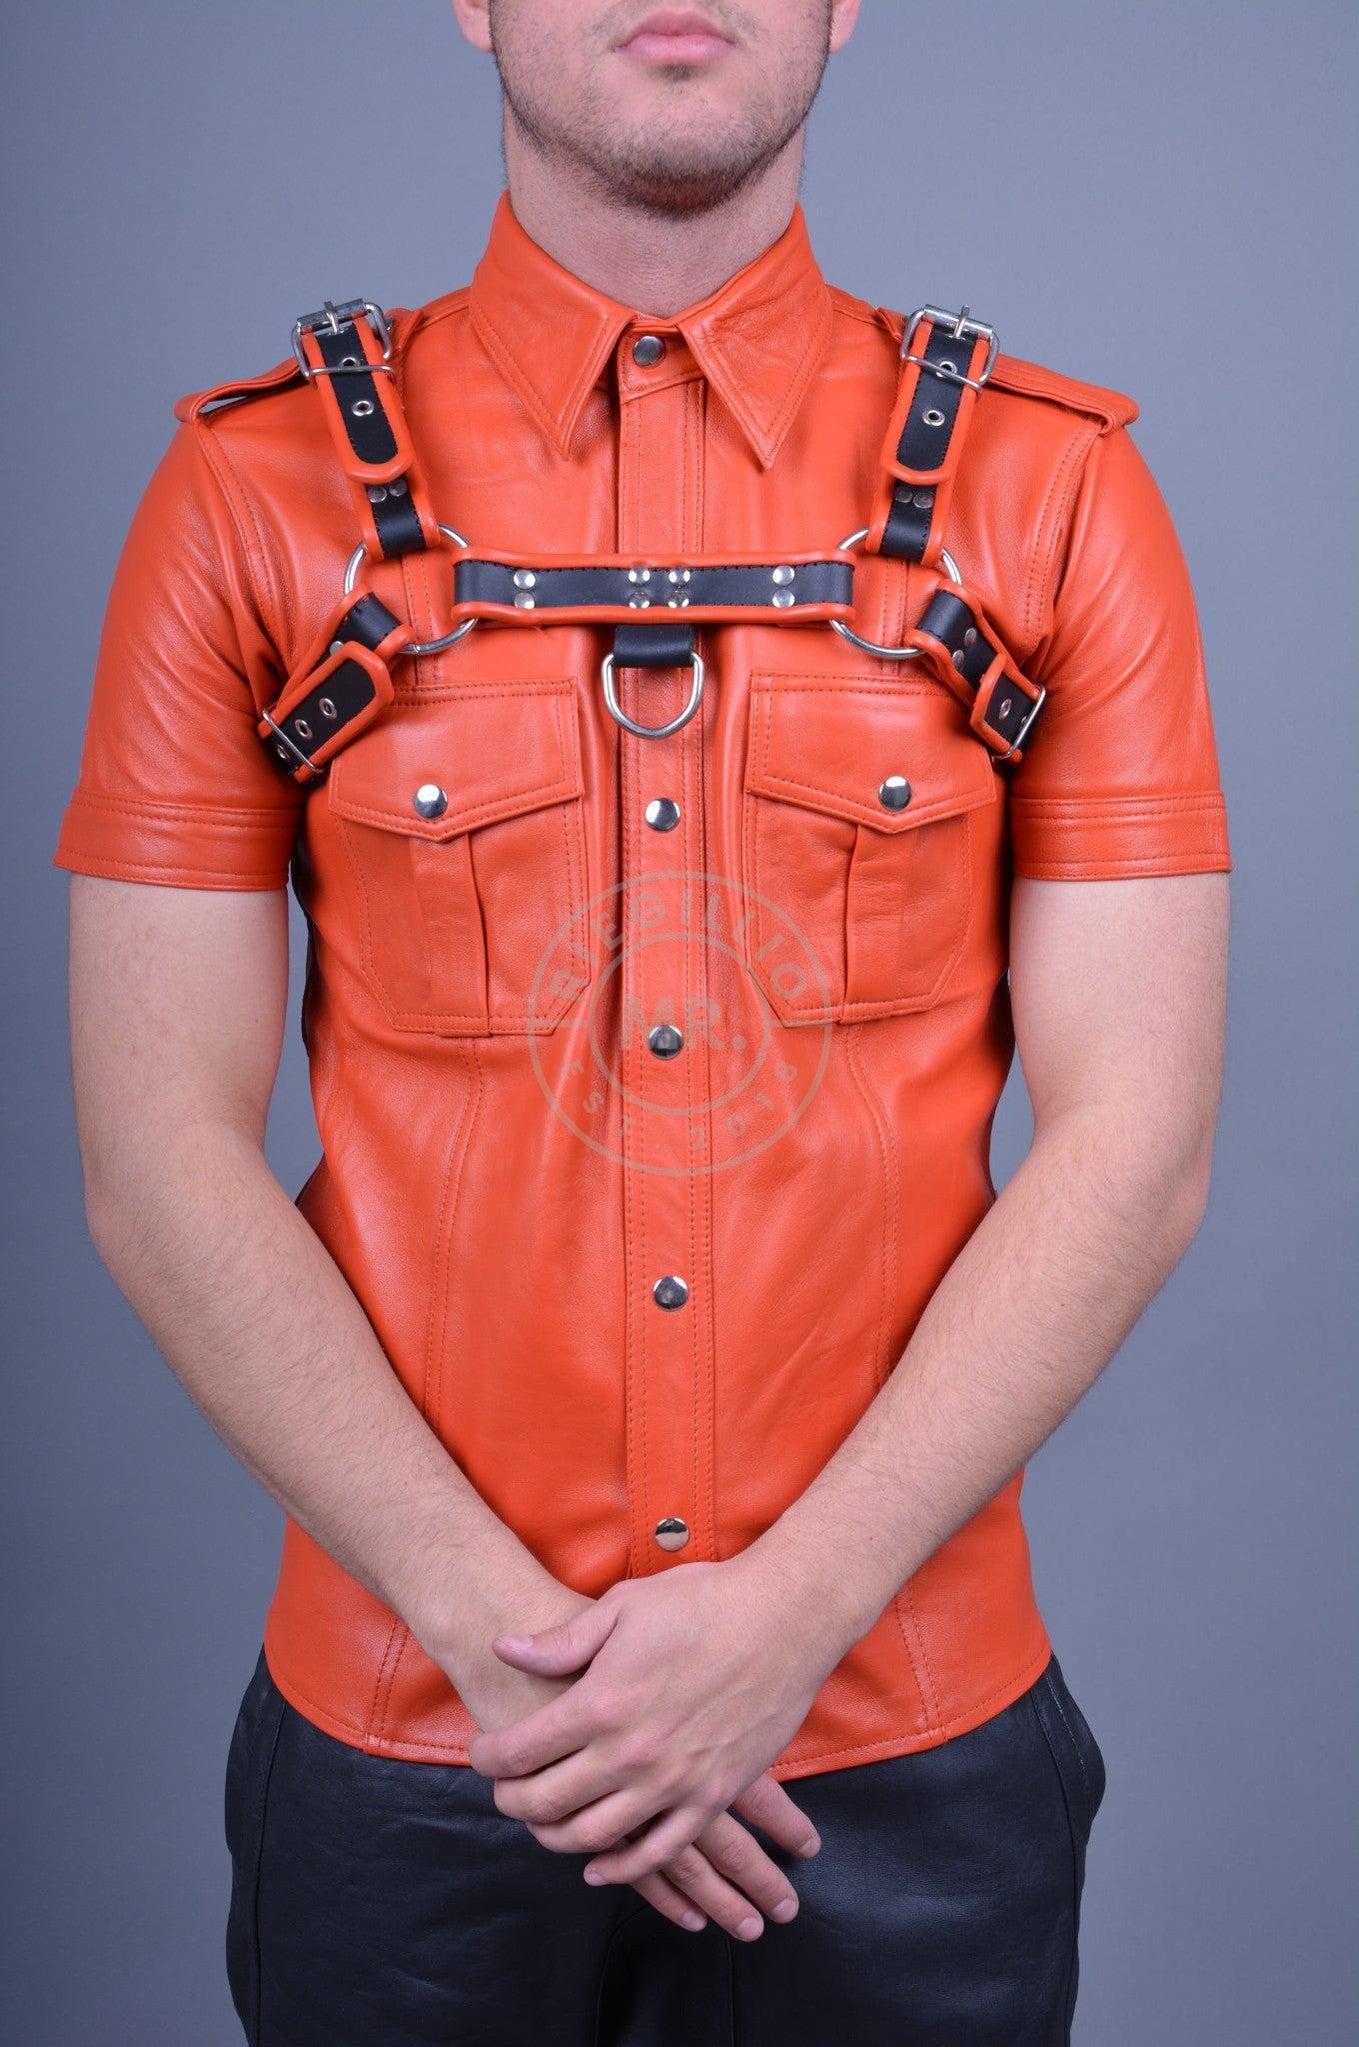 Orange Leather Harness at MR. Riegillio